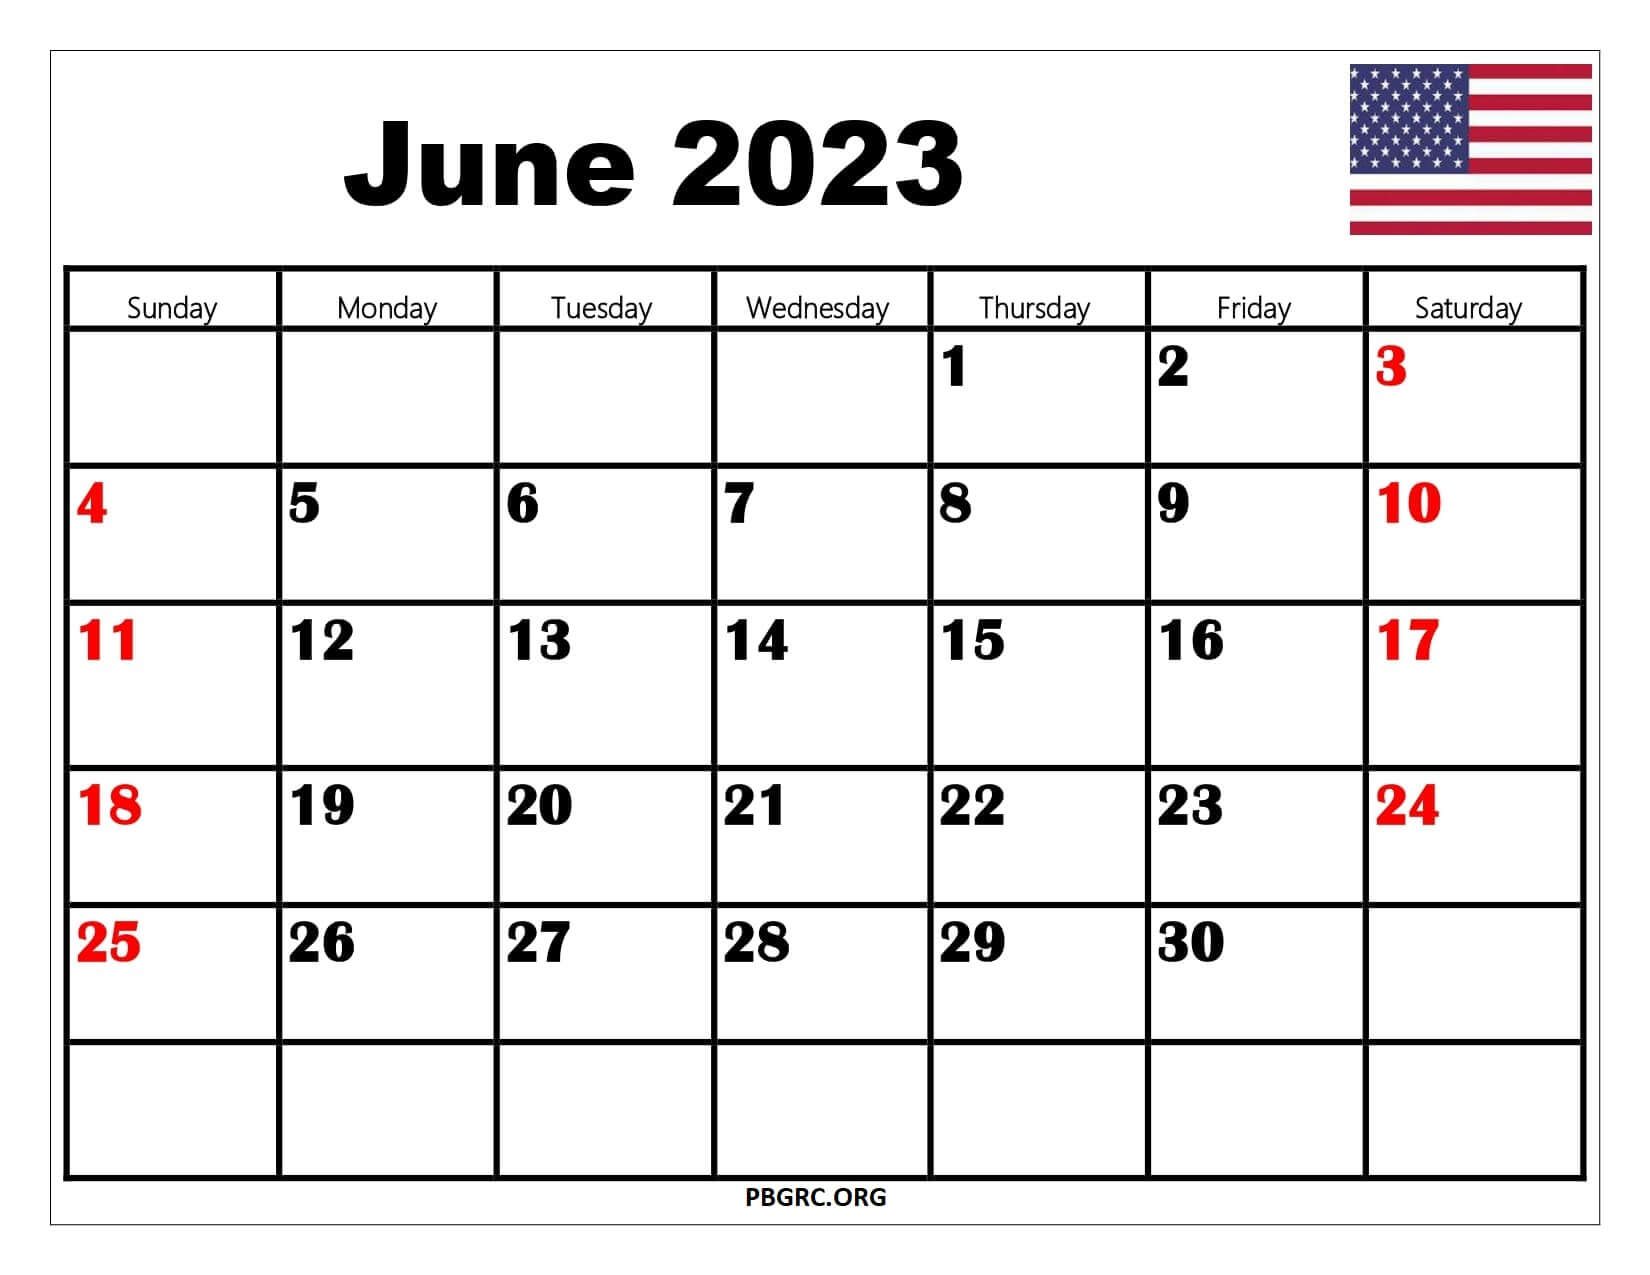 June 2023 Calendar with USA Holidays